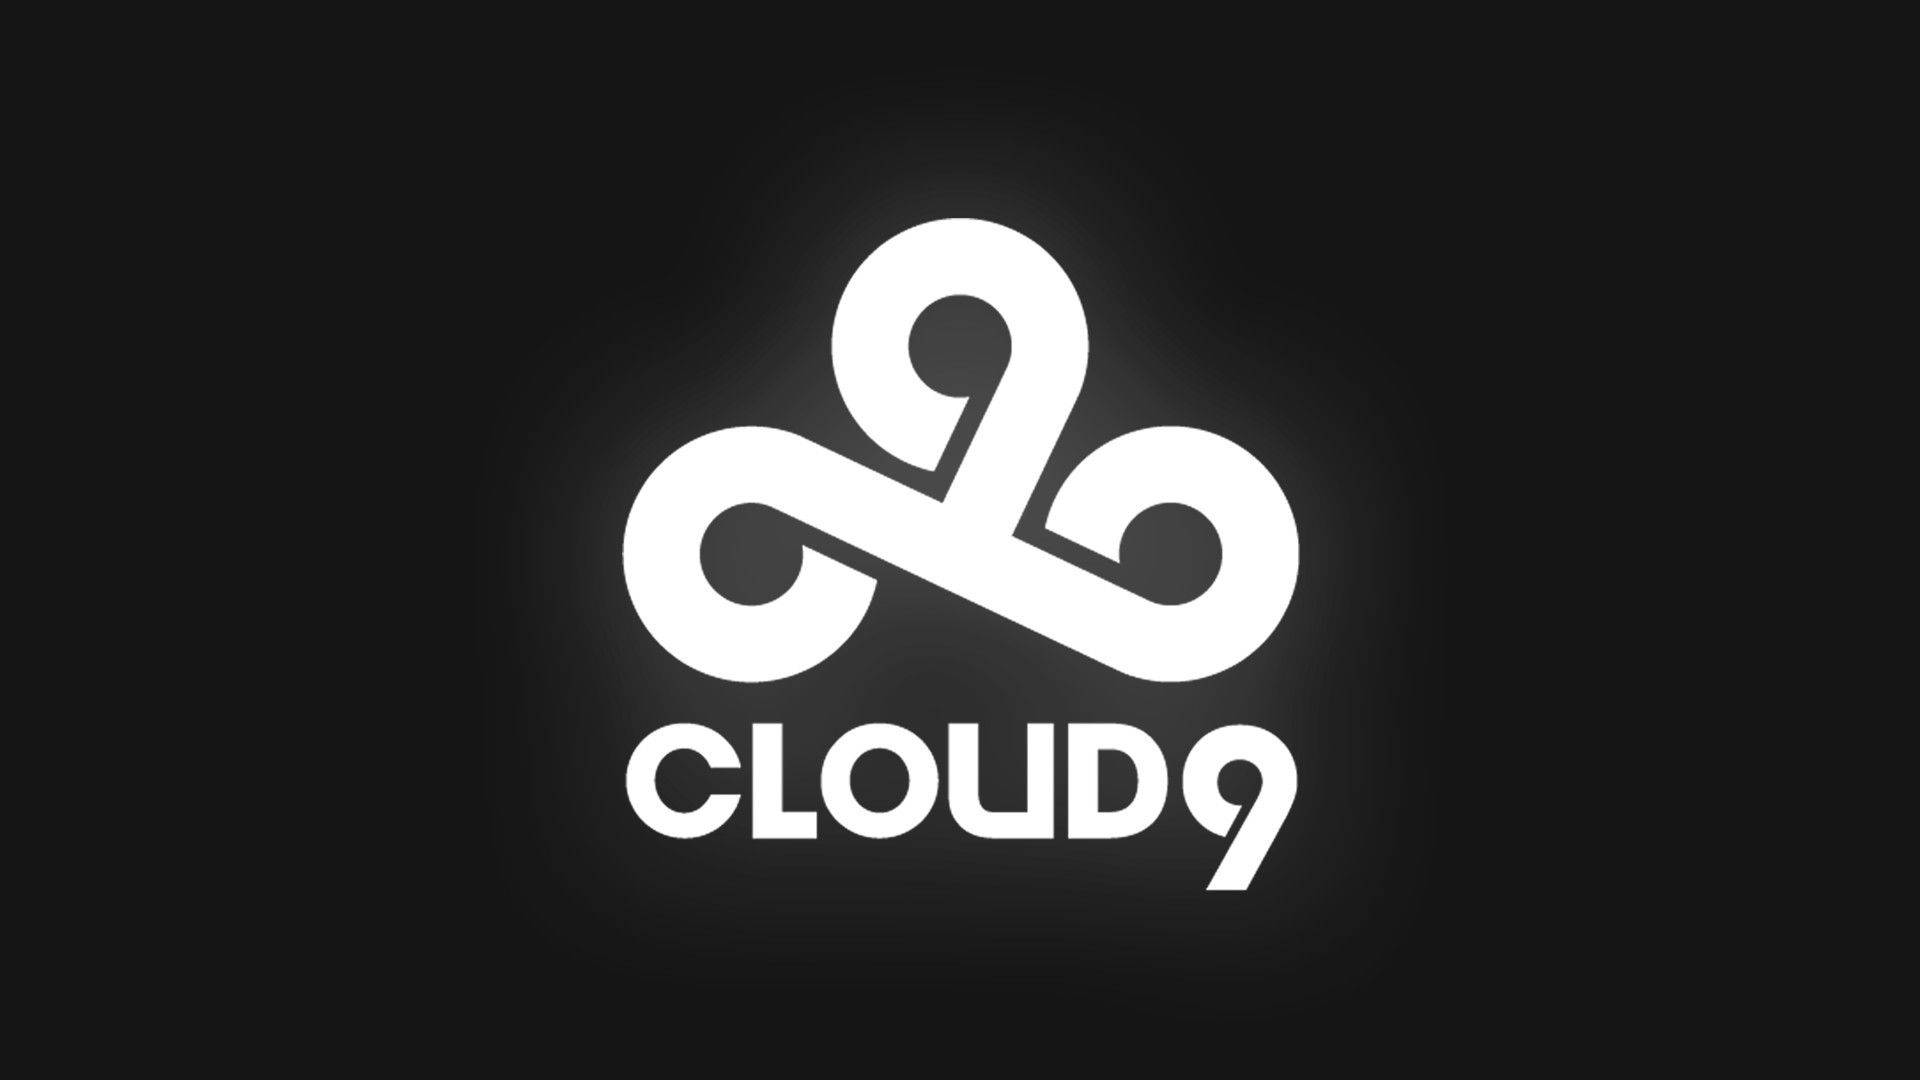 Cloud9 Background Wallpaper